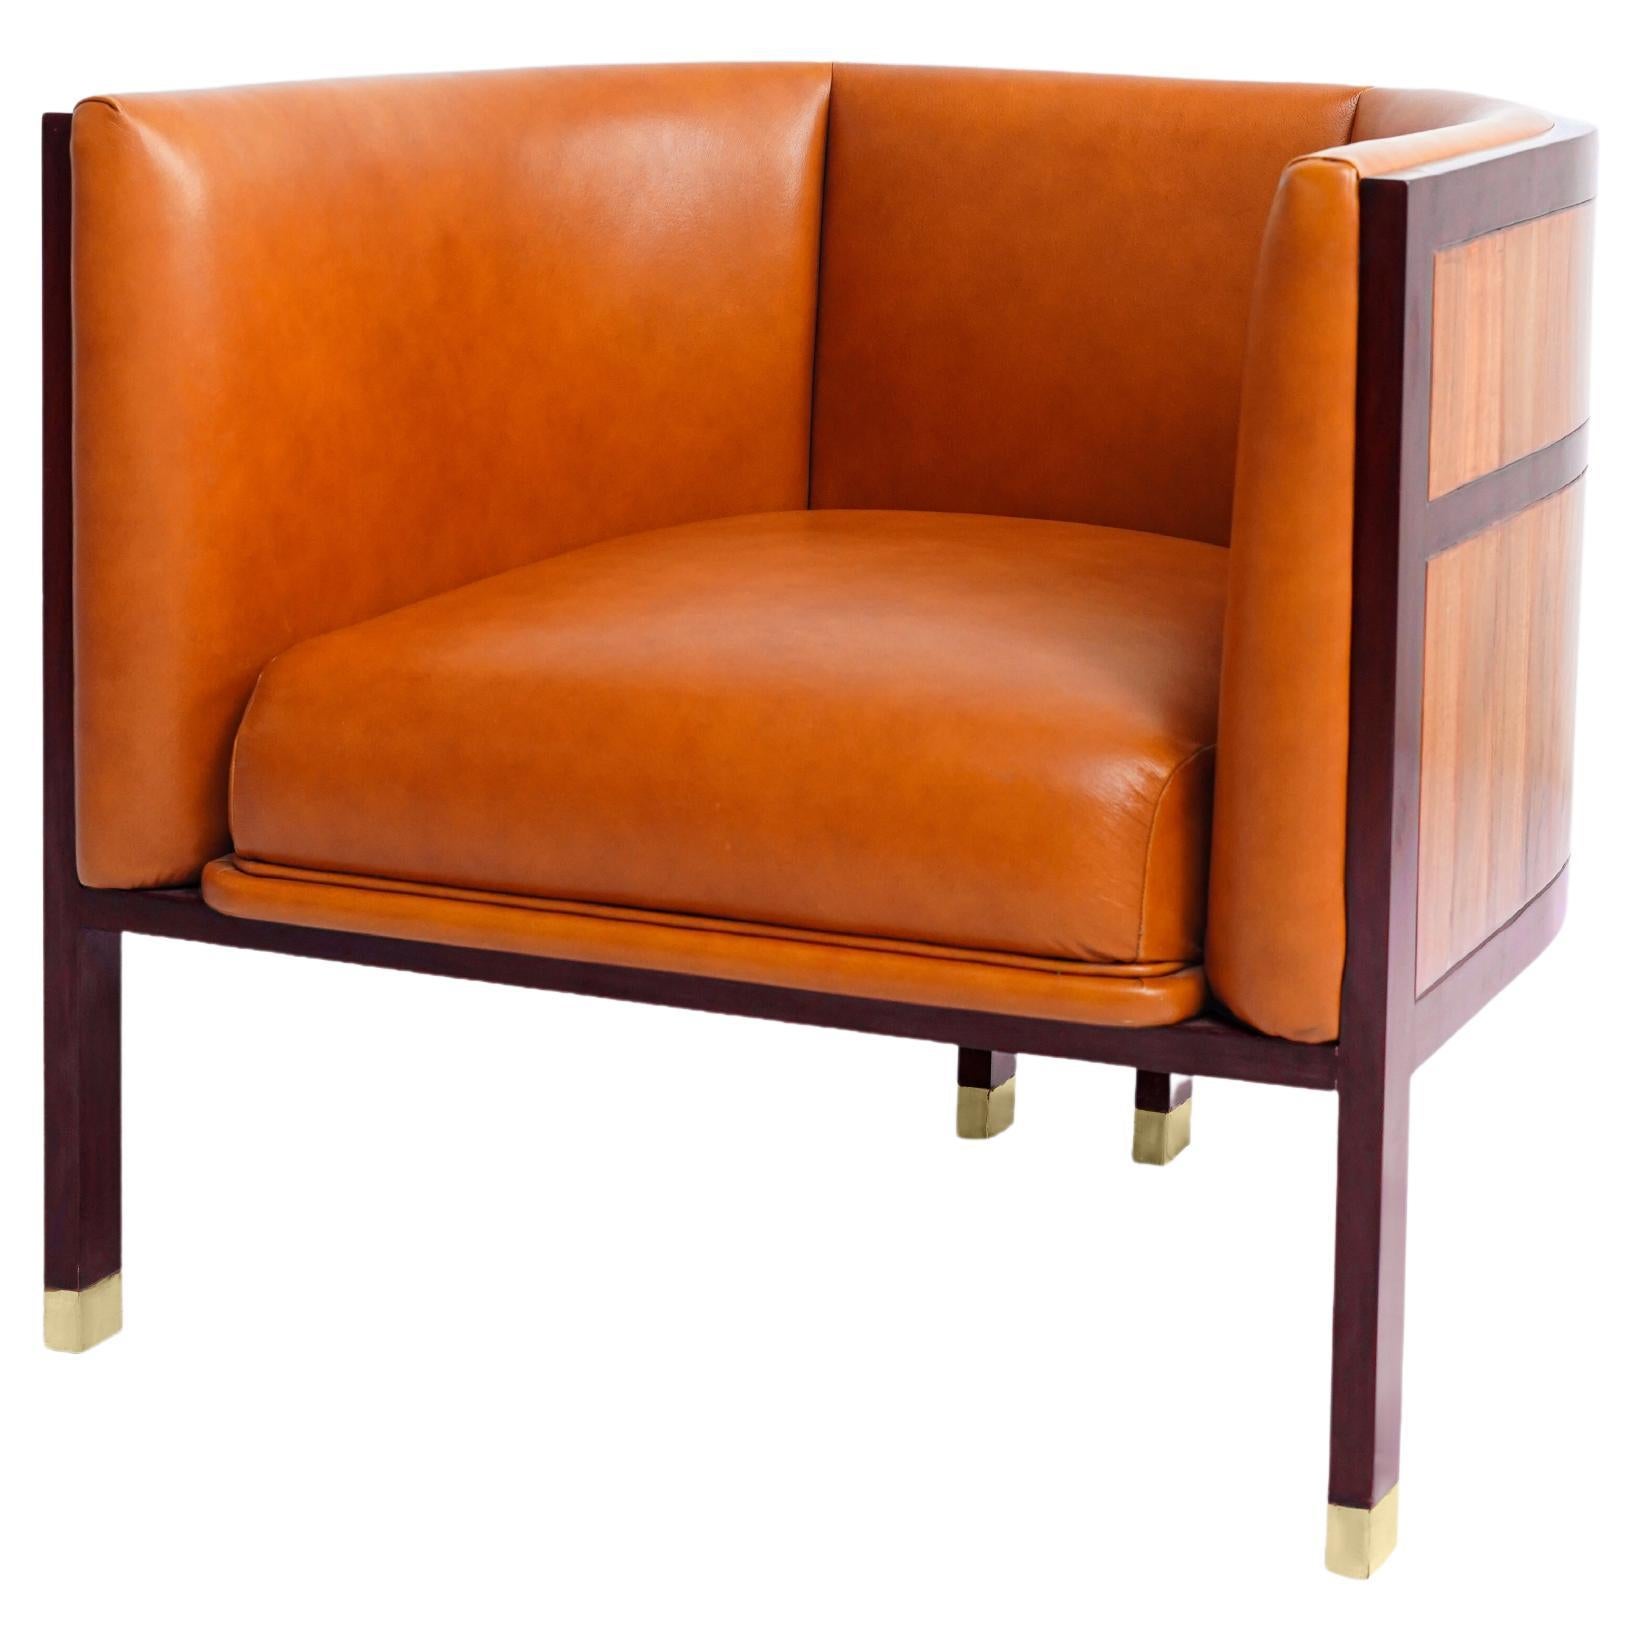 Original lounge chair, Barrel chair, round back chair, bold, modern, walnut wood For Sale